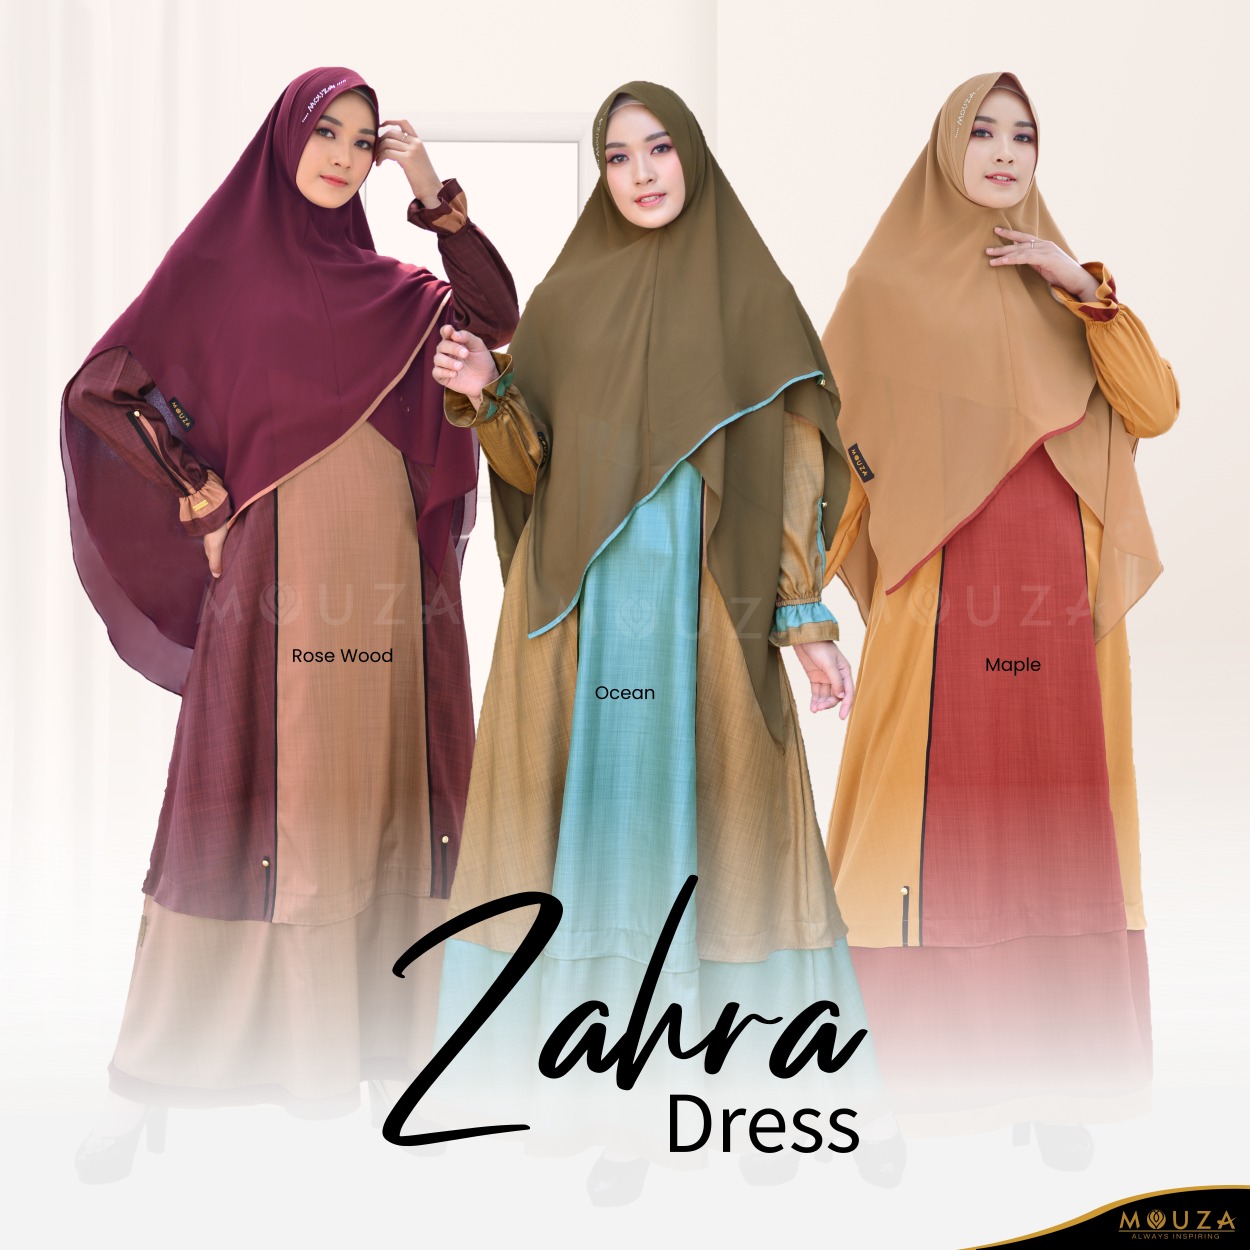 Zahra Dress